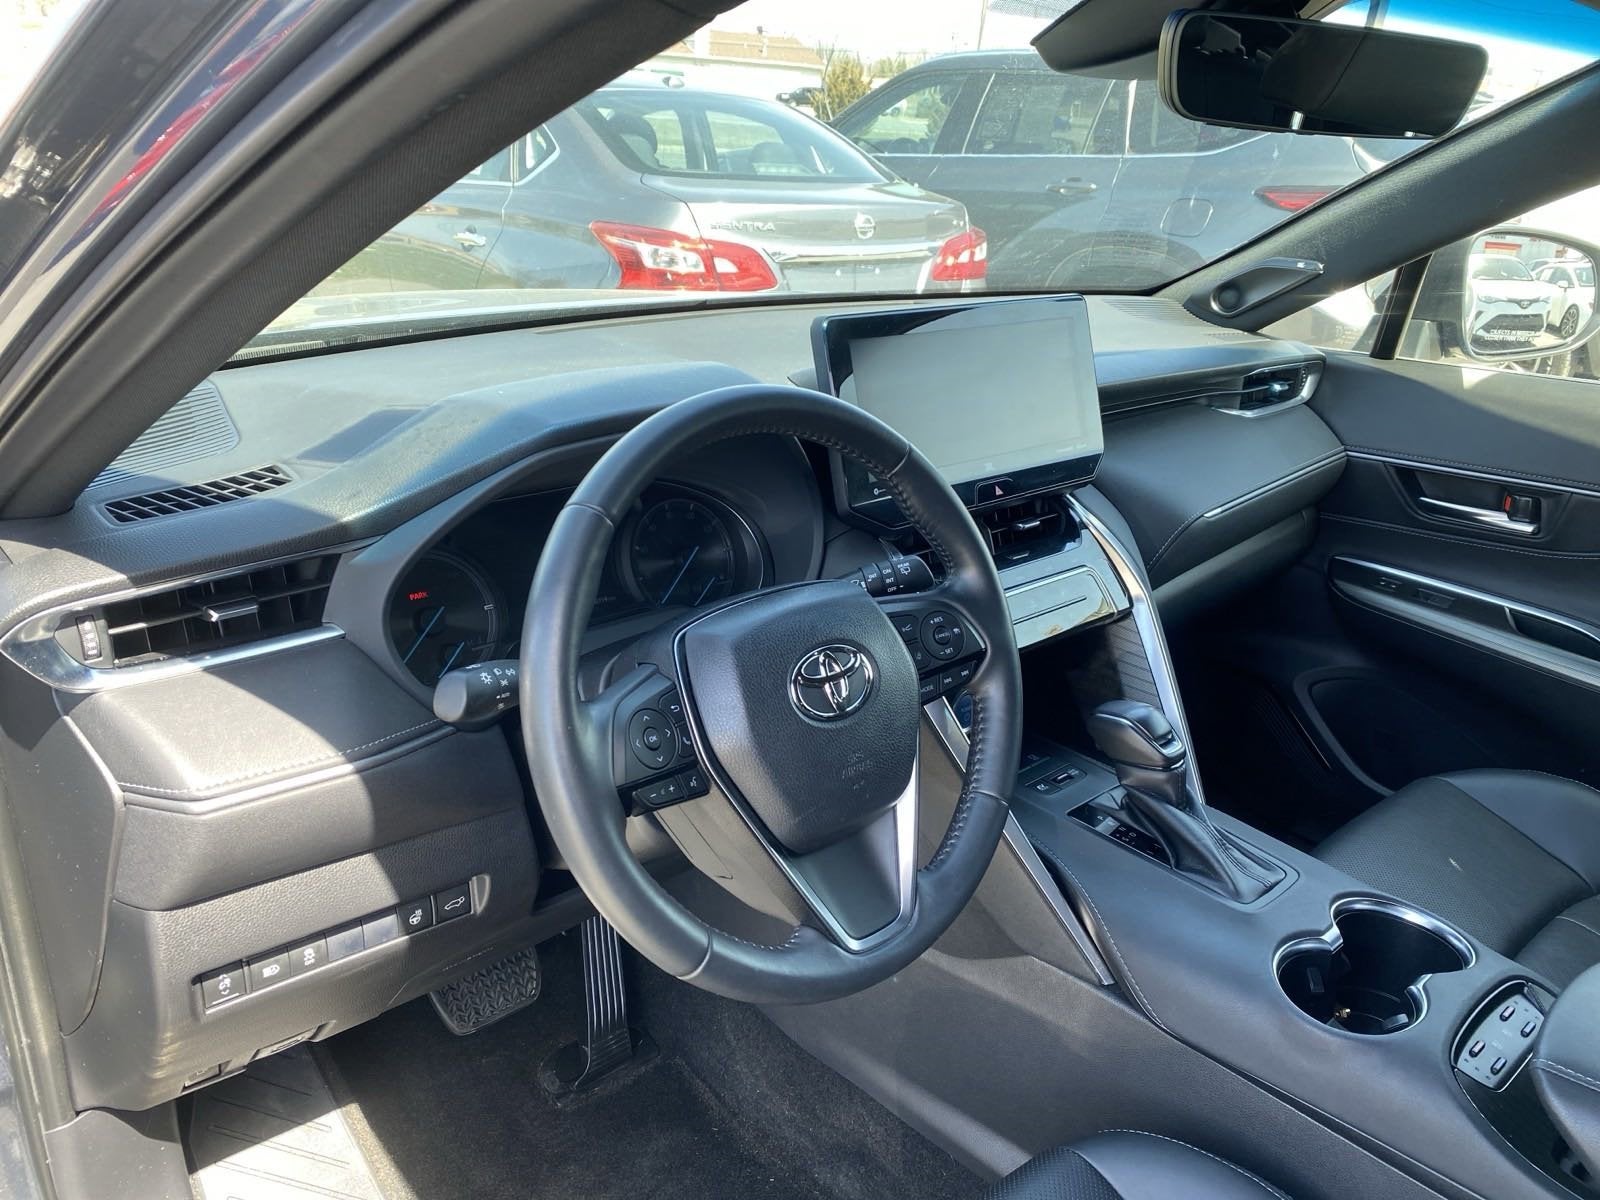 2021 Toyota Venza XLE